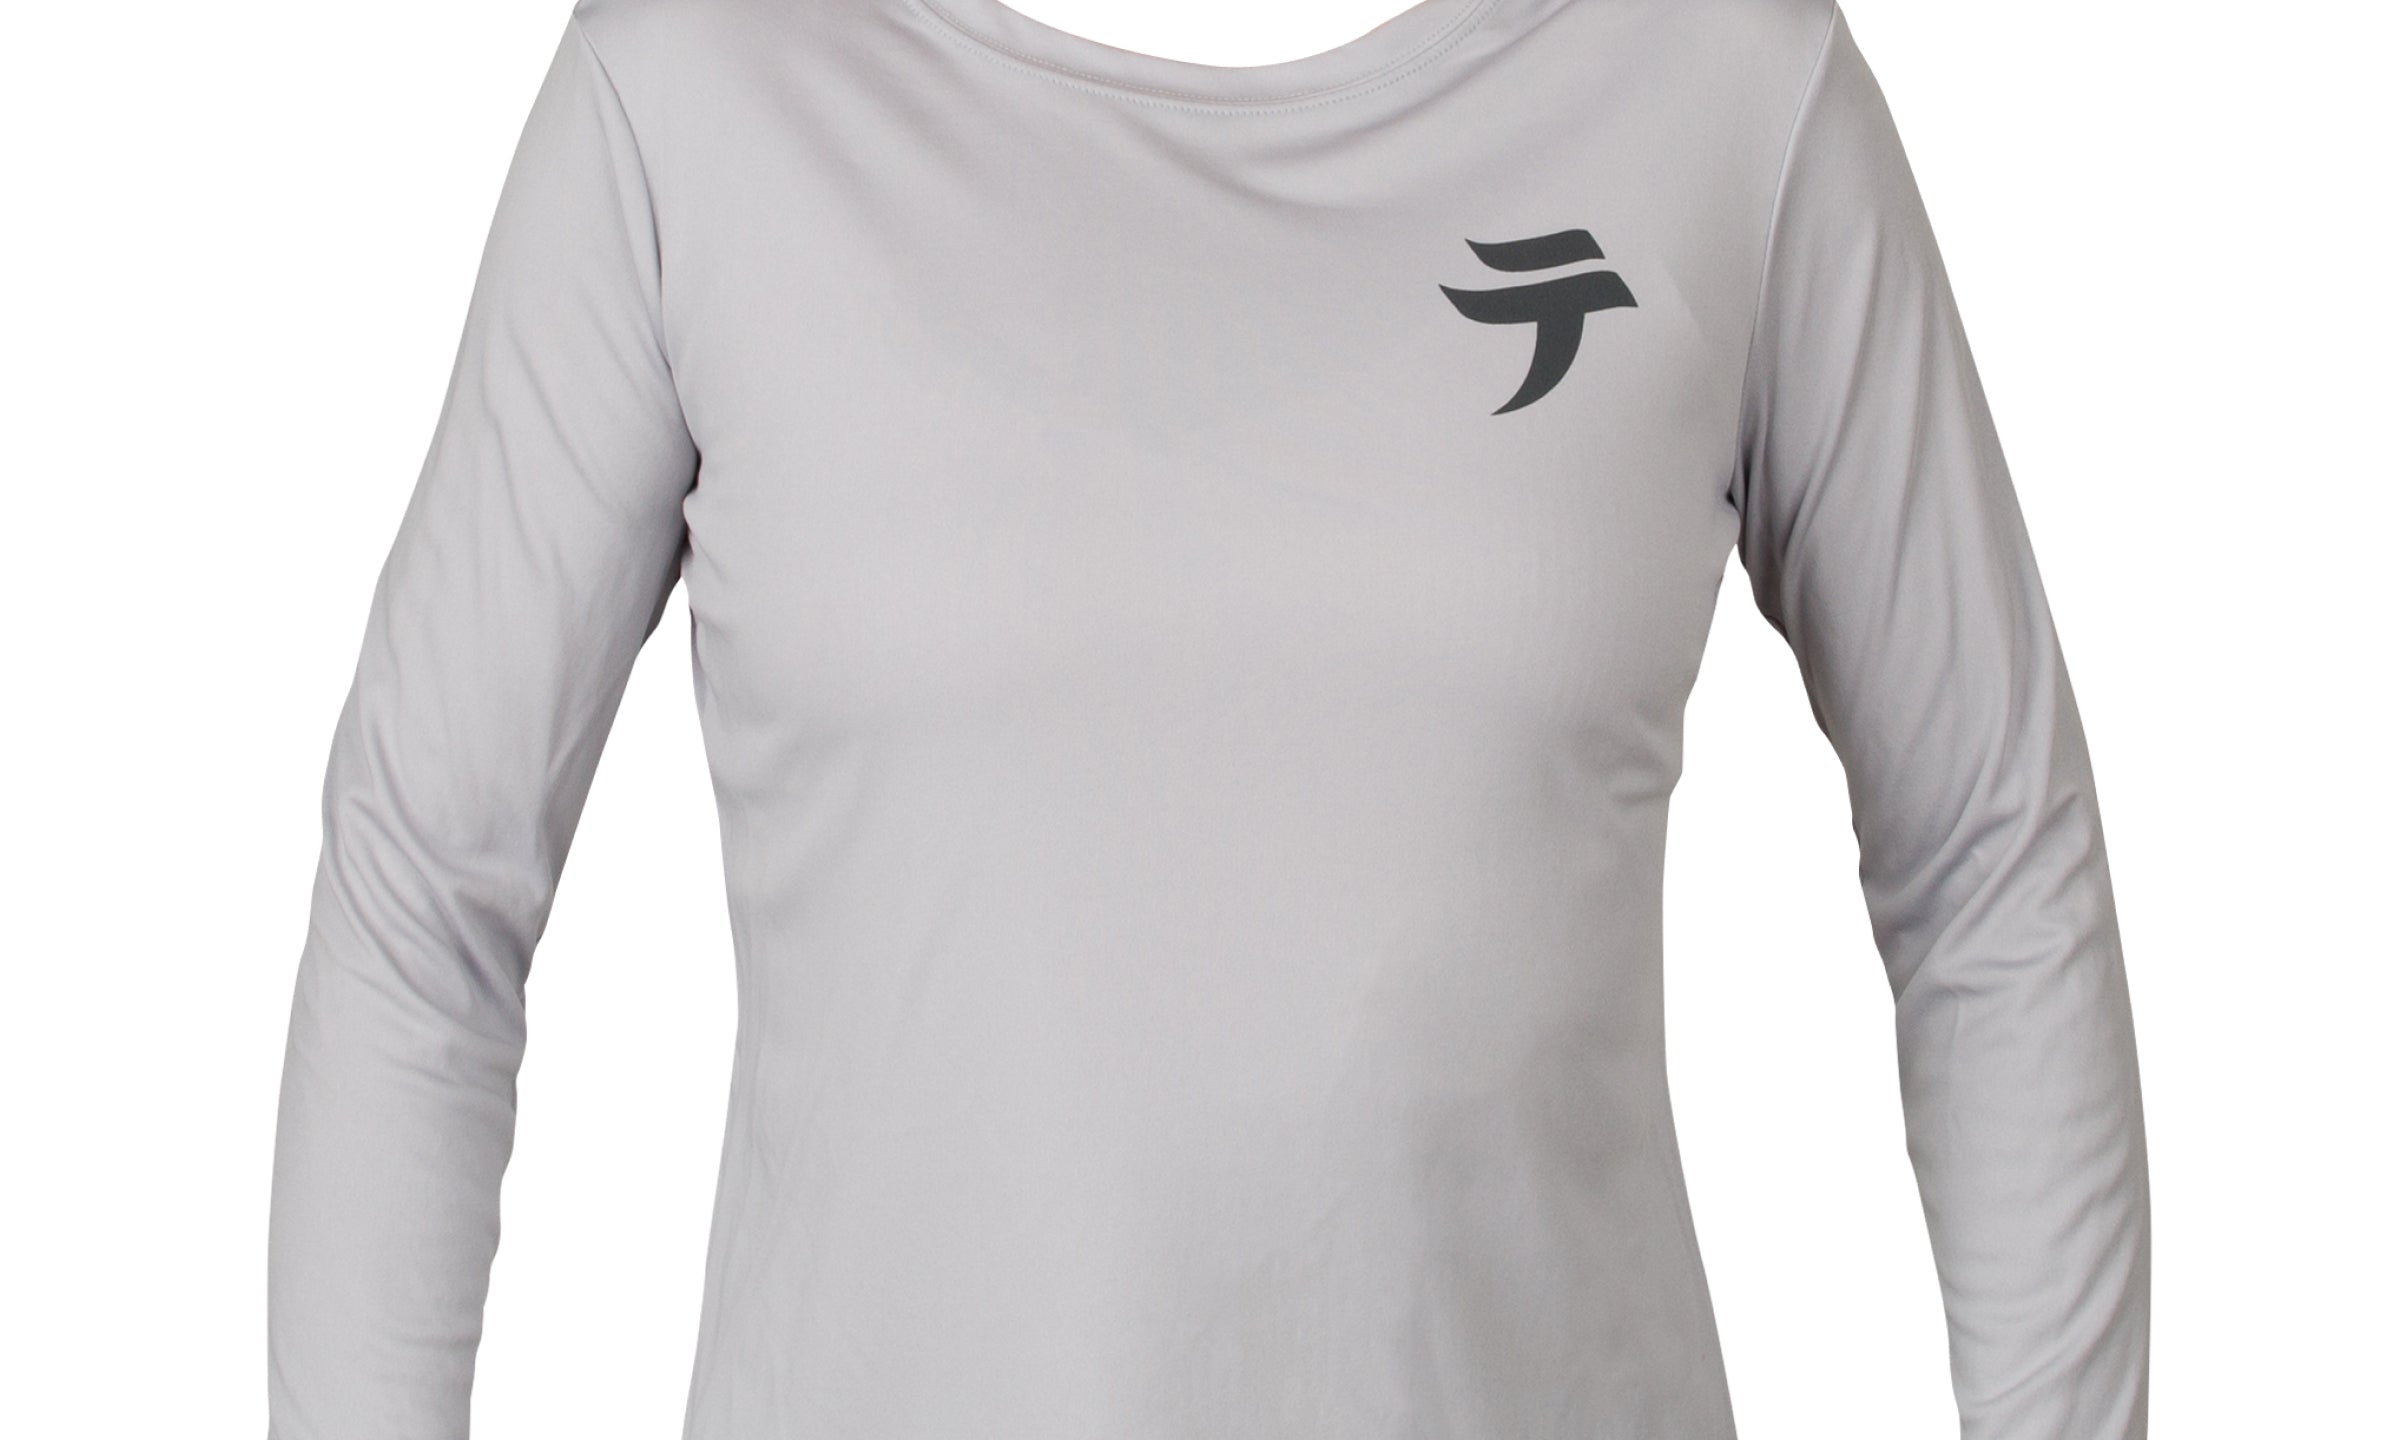 Tenkara USA Long Sleeve Shirt Women's.